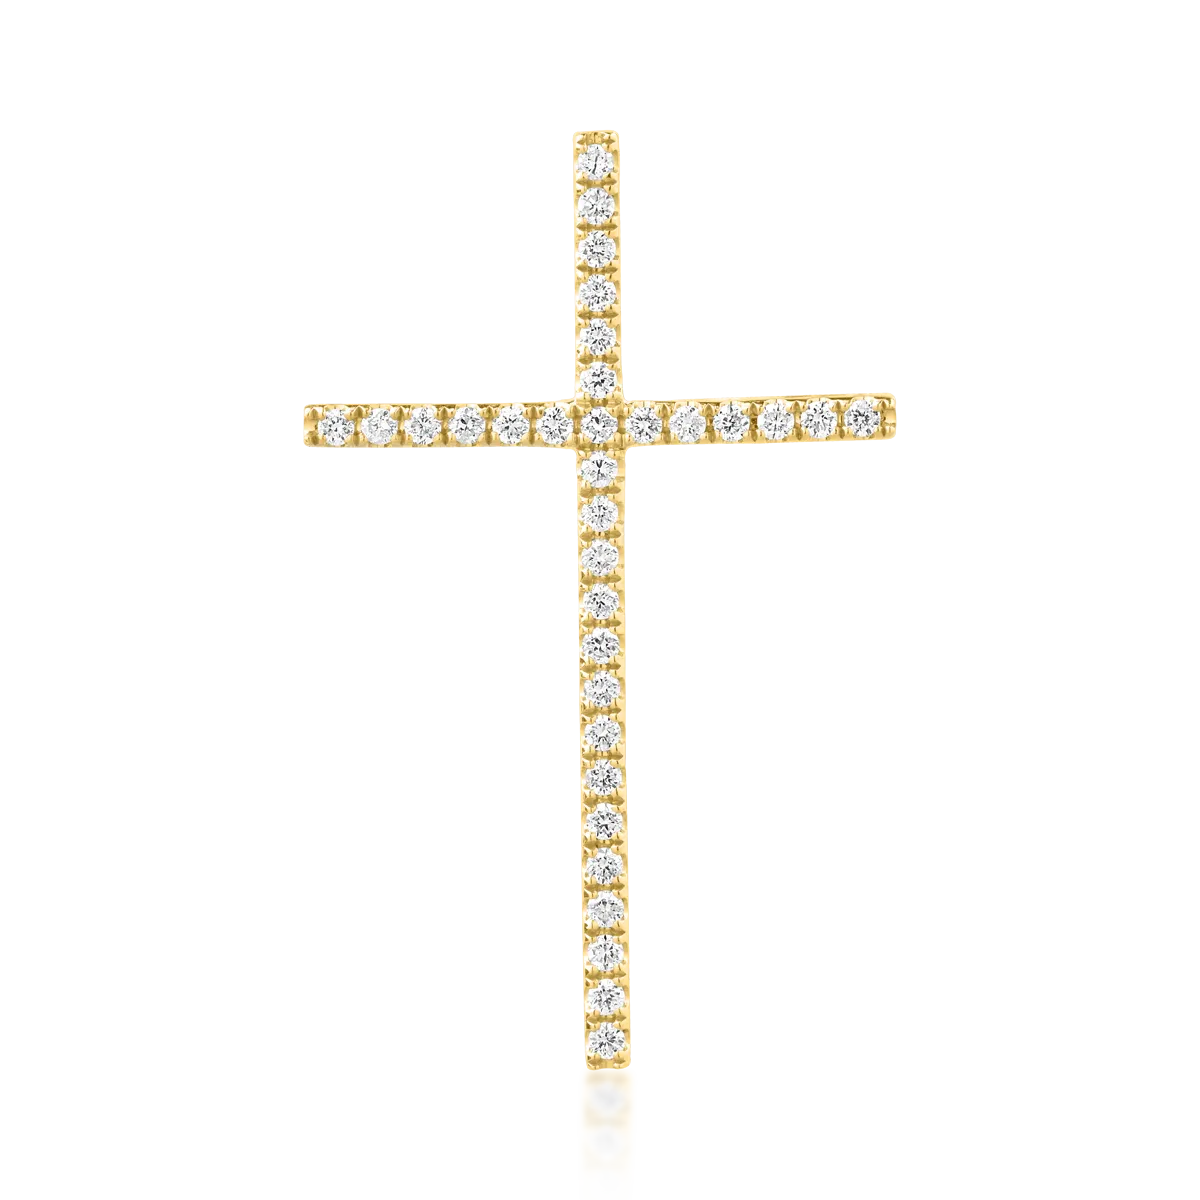 18K yellow gold cross pendant with 0.23ct diamonds